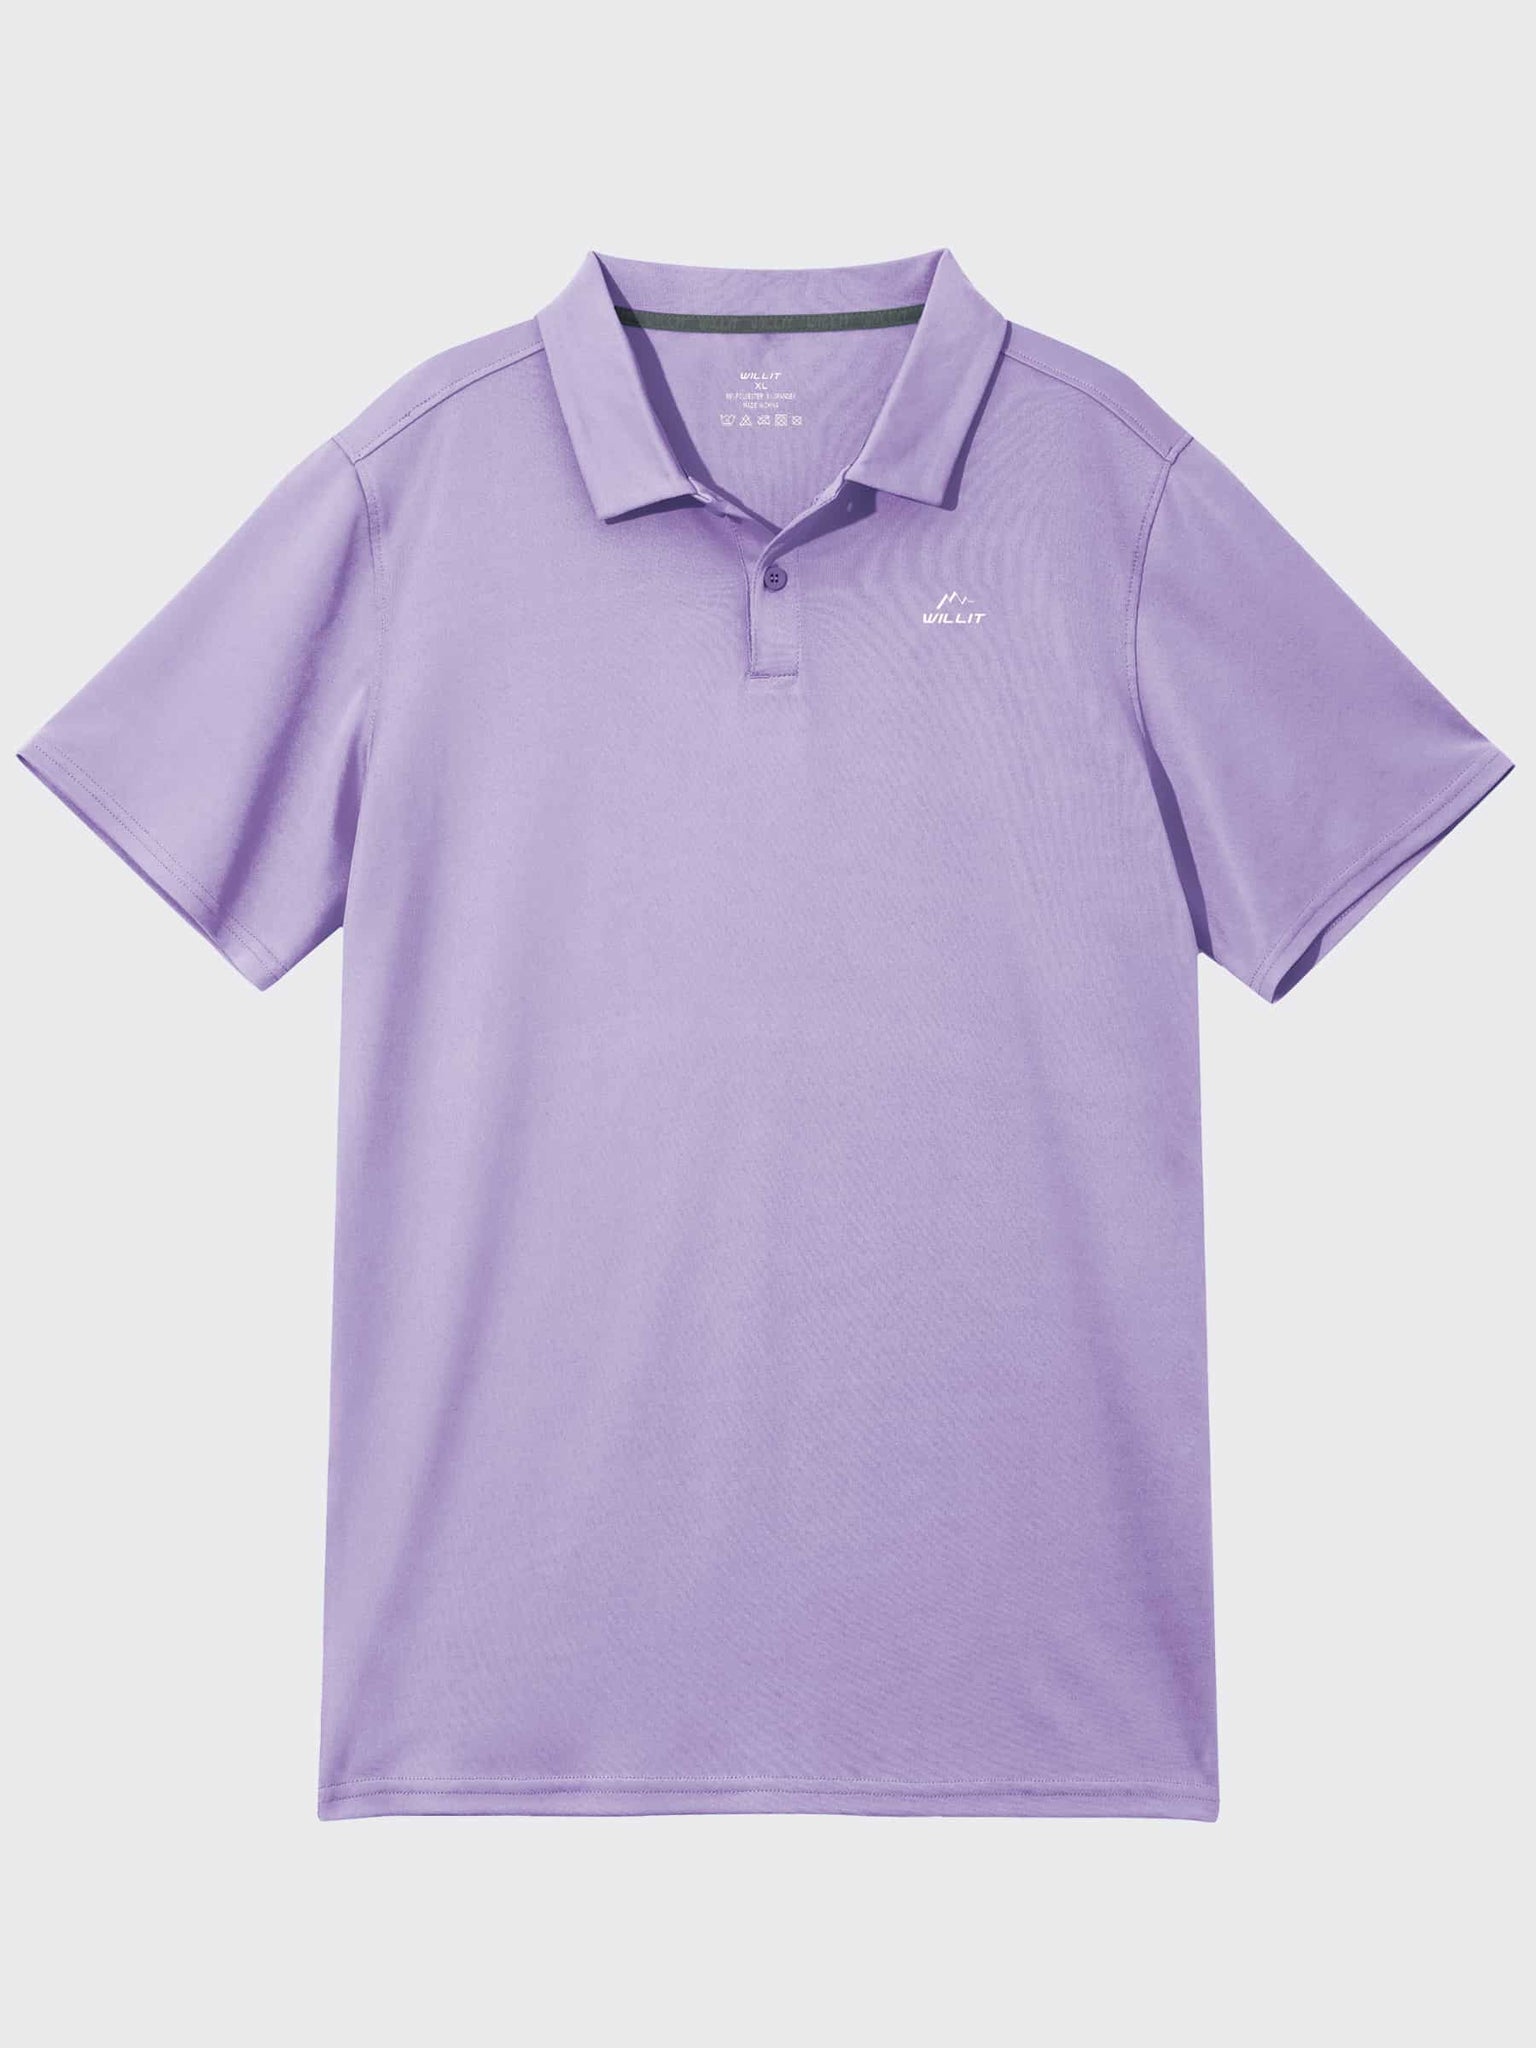 Youth Golf Polo Sun Shirts_LightPurple_laydown4